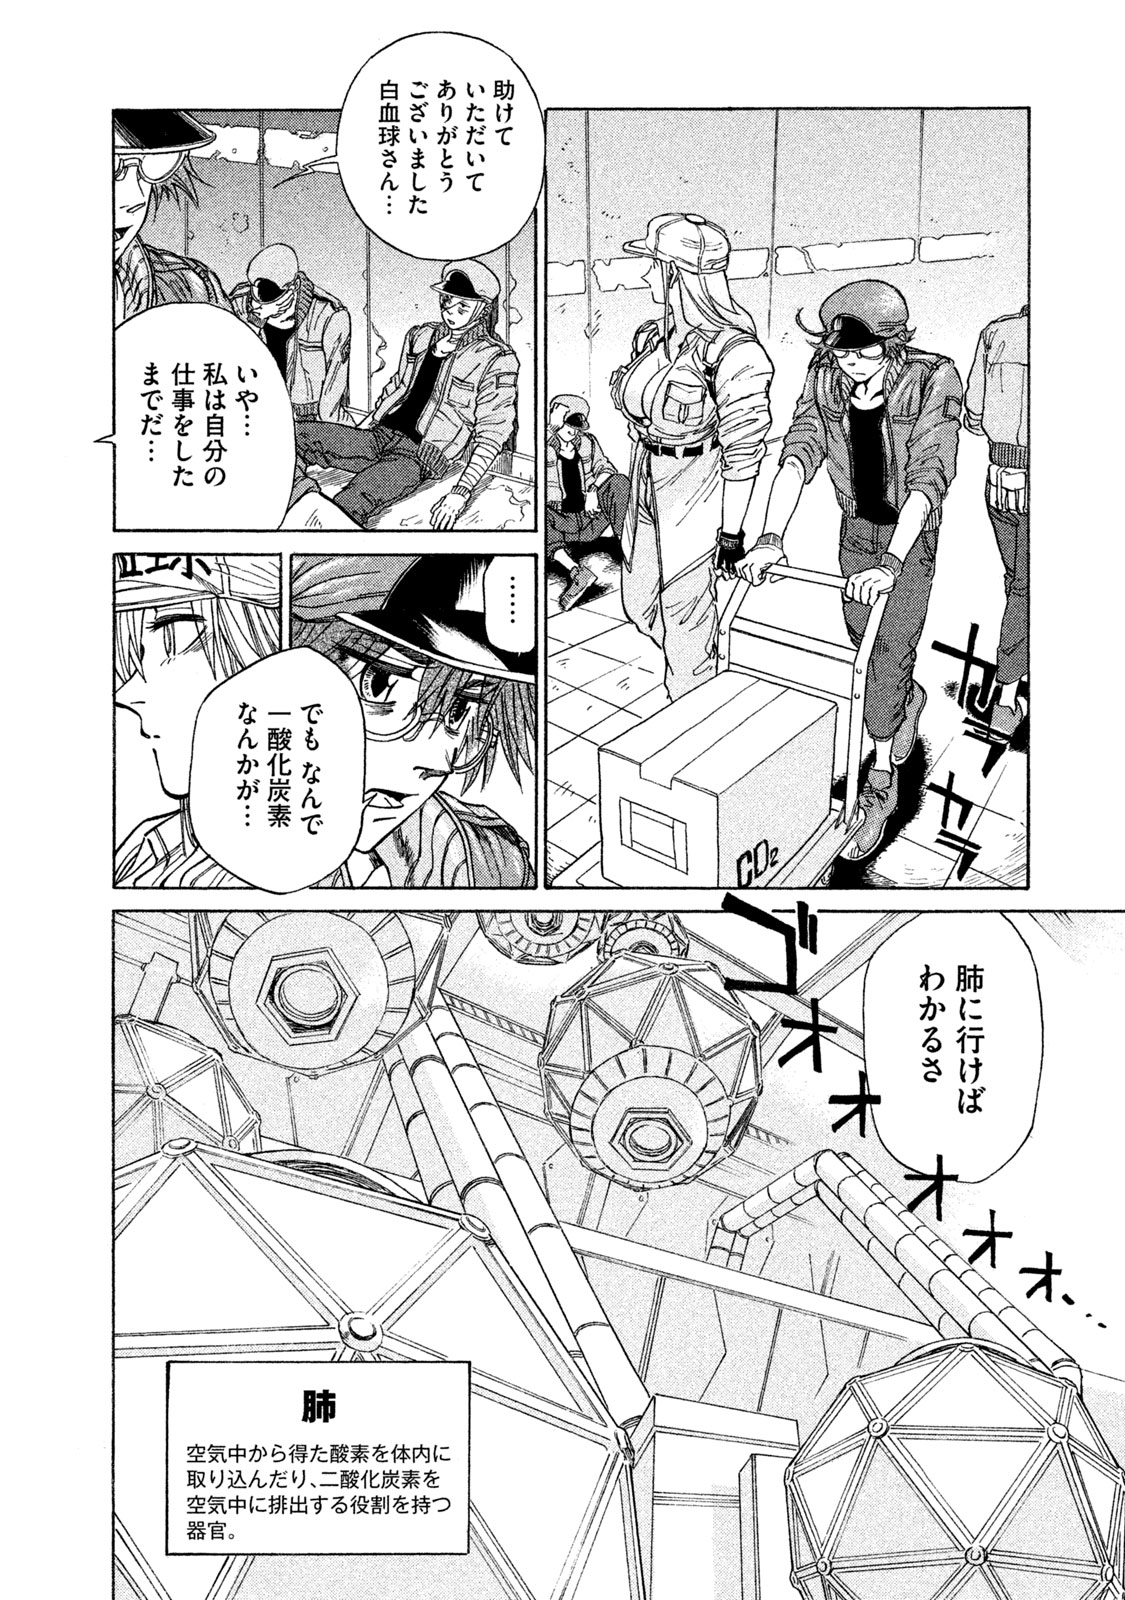 Hataraku Saibou BLACK - Chapter 1 - Page 34